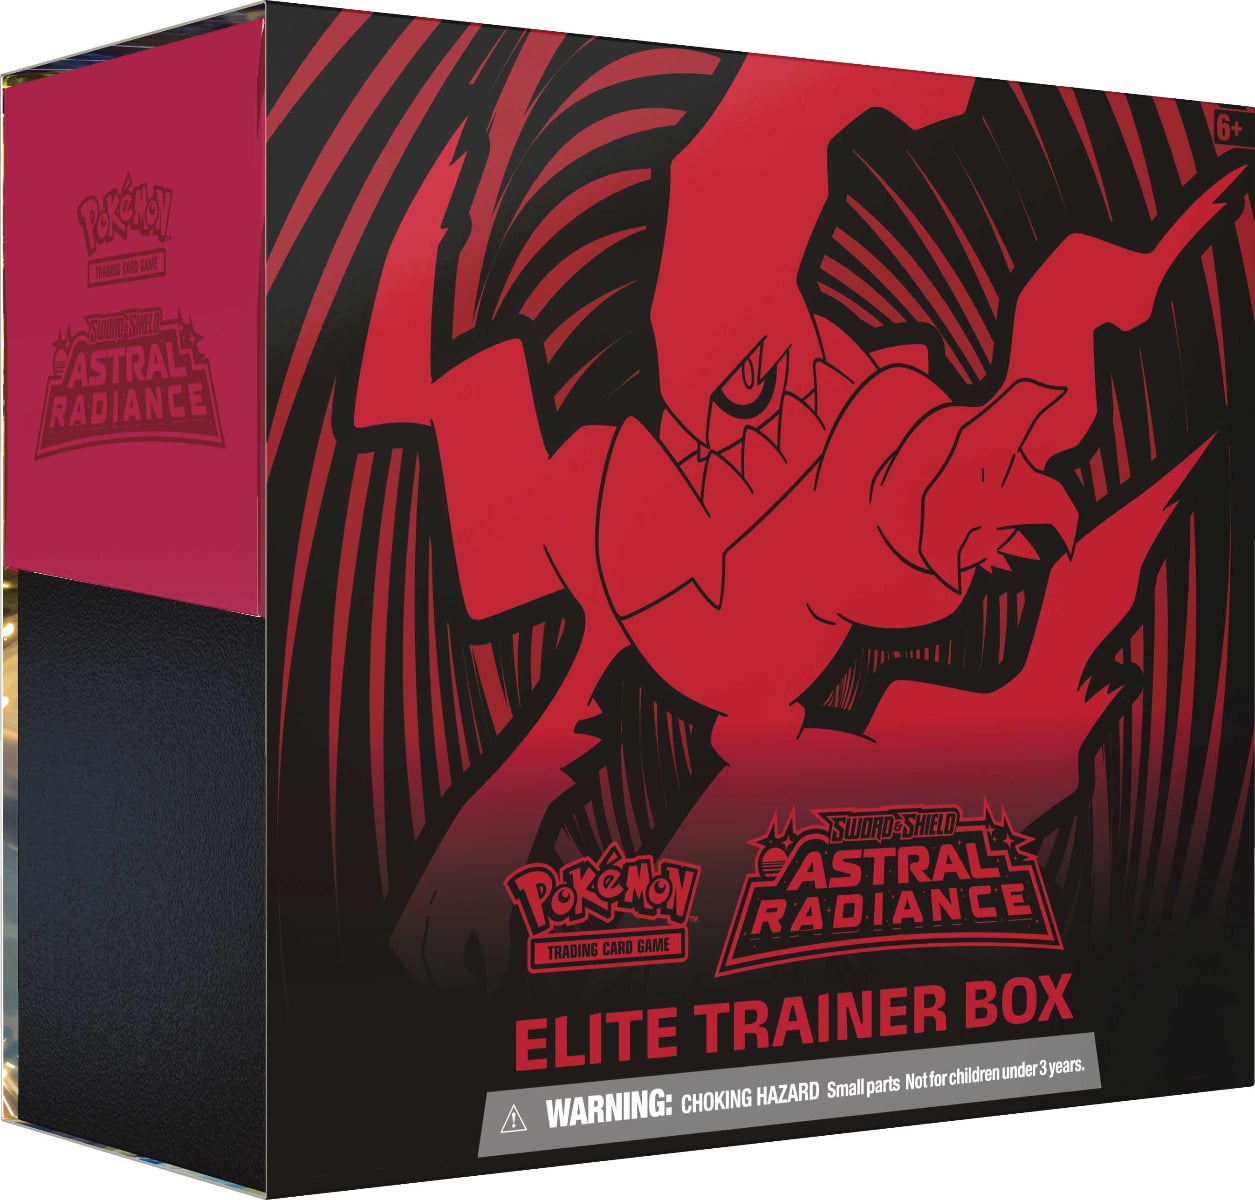 Pokémon Elite Trainer Box Astral Radiance